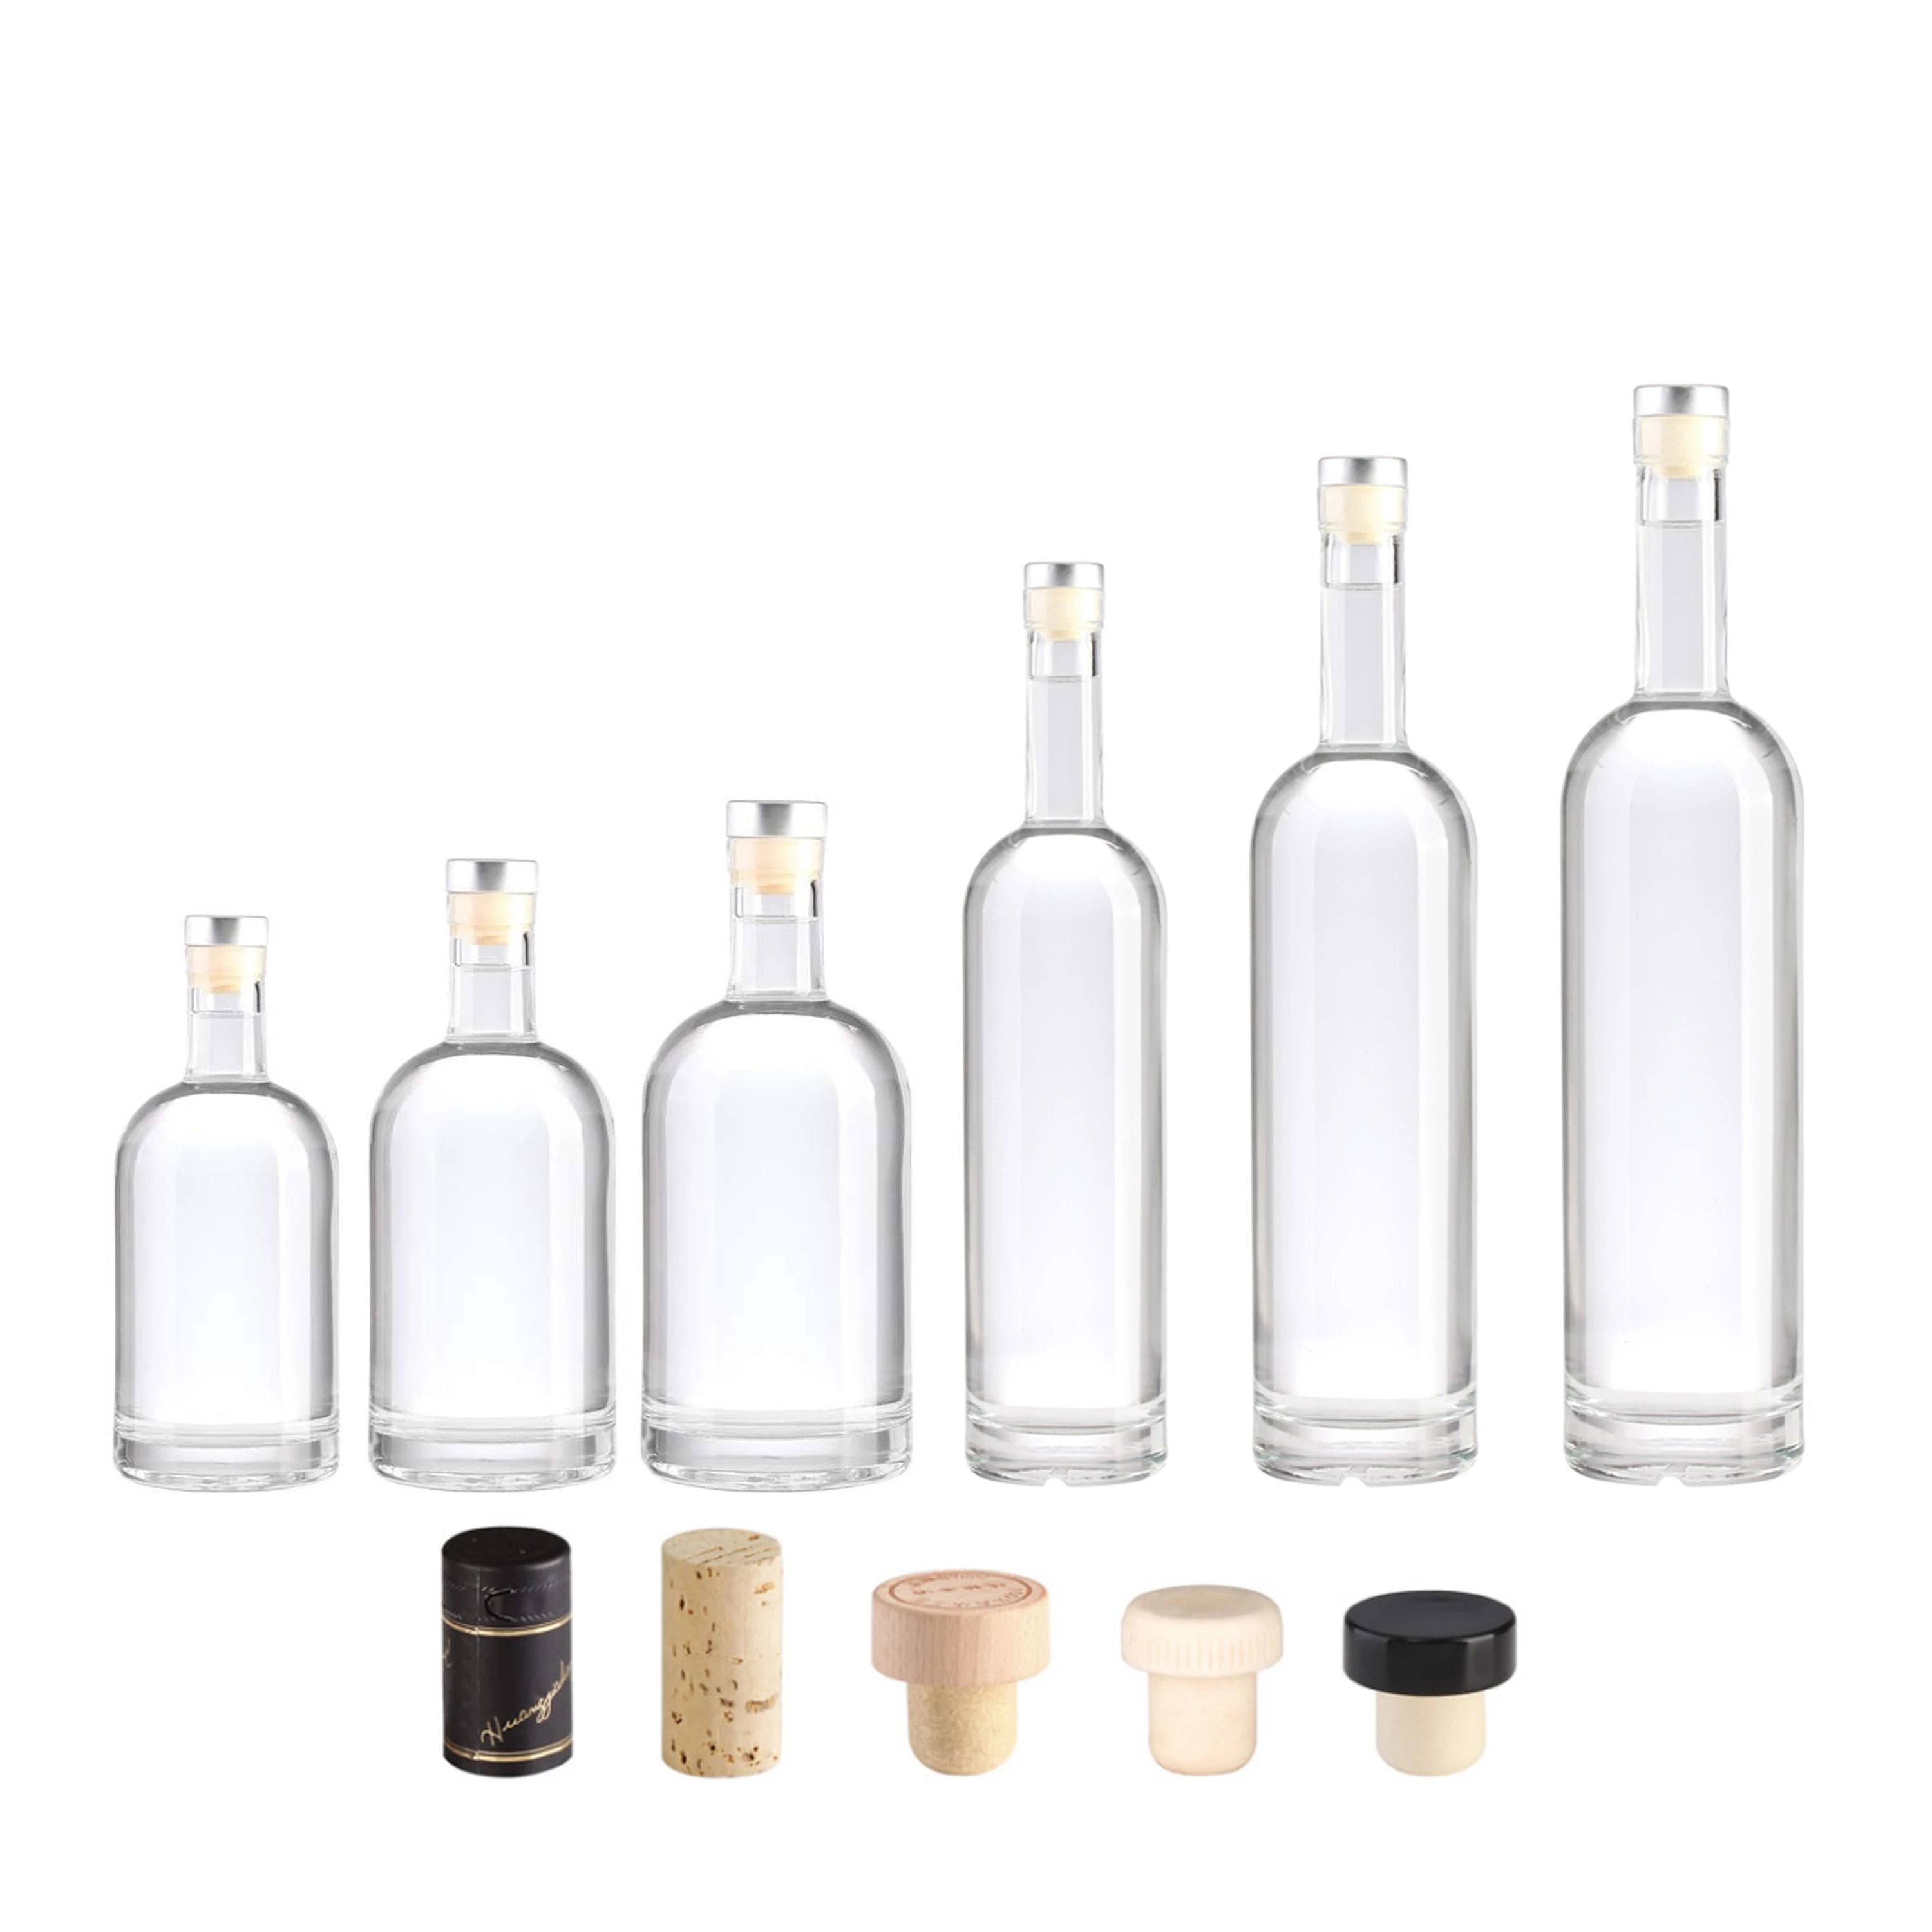 Galileo Flint Glass Bottle with Cork Lid 7oz / 200ml